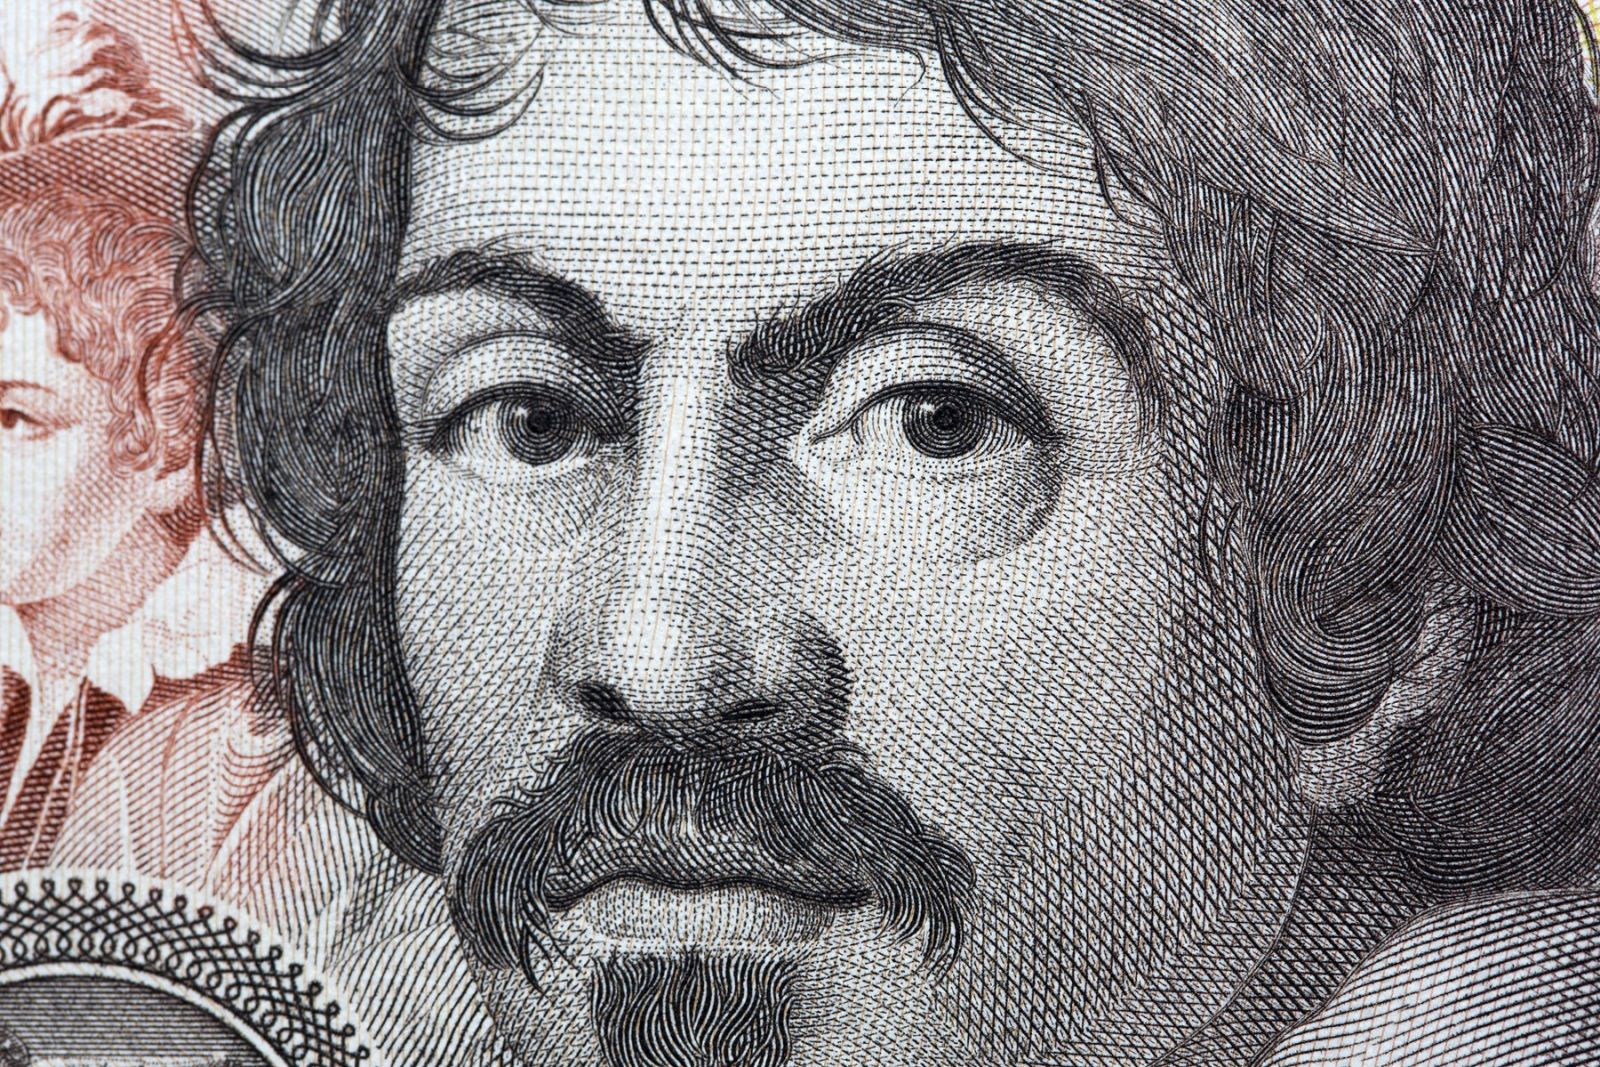 Caravaggio a closeup portrait from Italian money - lira,Image: 847373187, License: Royalty-free, Restrictions: , Model Release: no, Credit line: Janusz Pieńkowski / Panthermedia / Profimedia